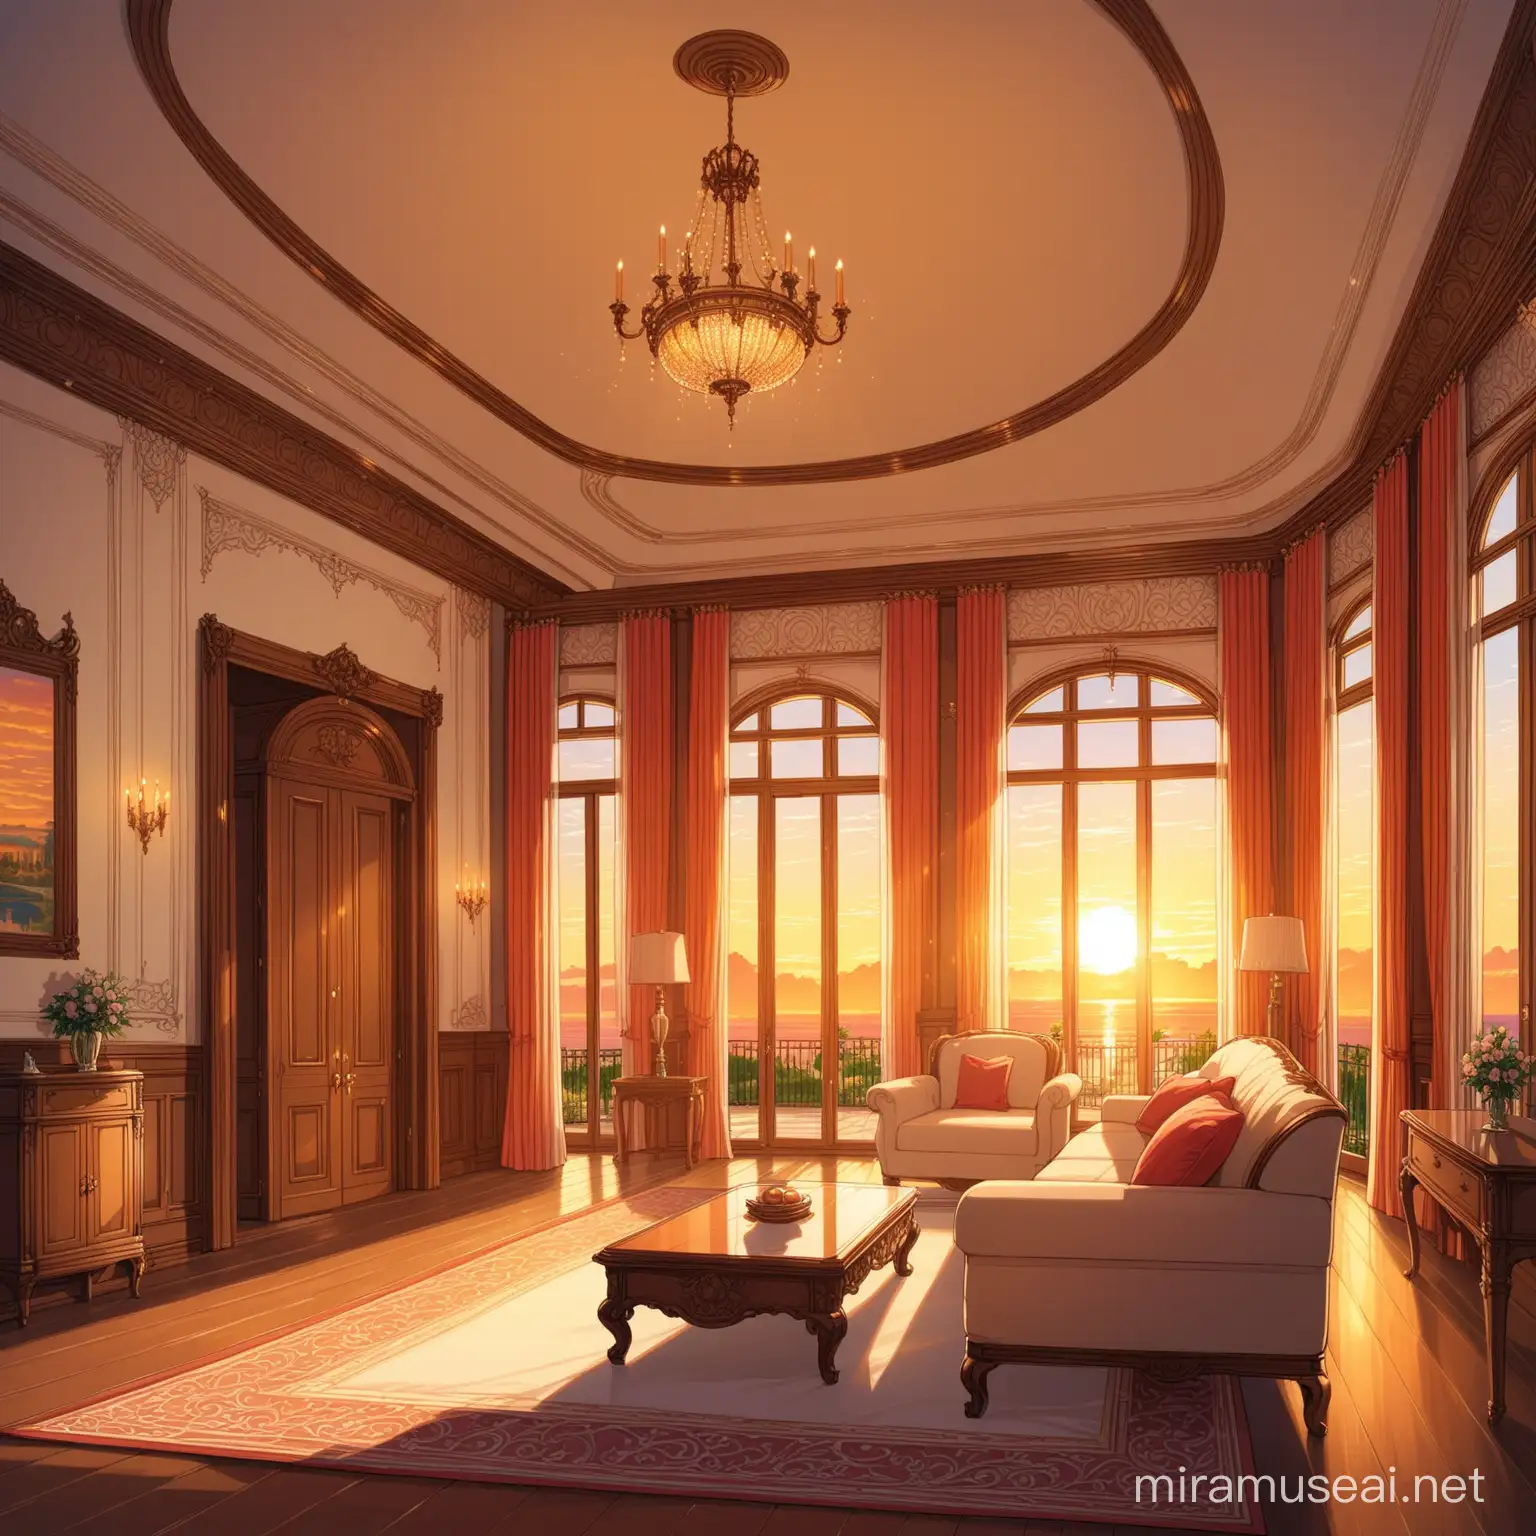 Sunset Glow in Luxurious Mansion Interior